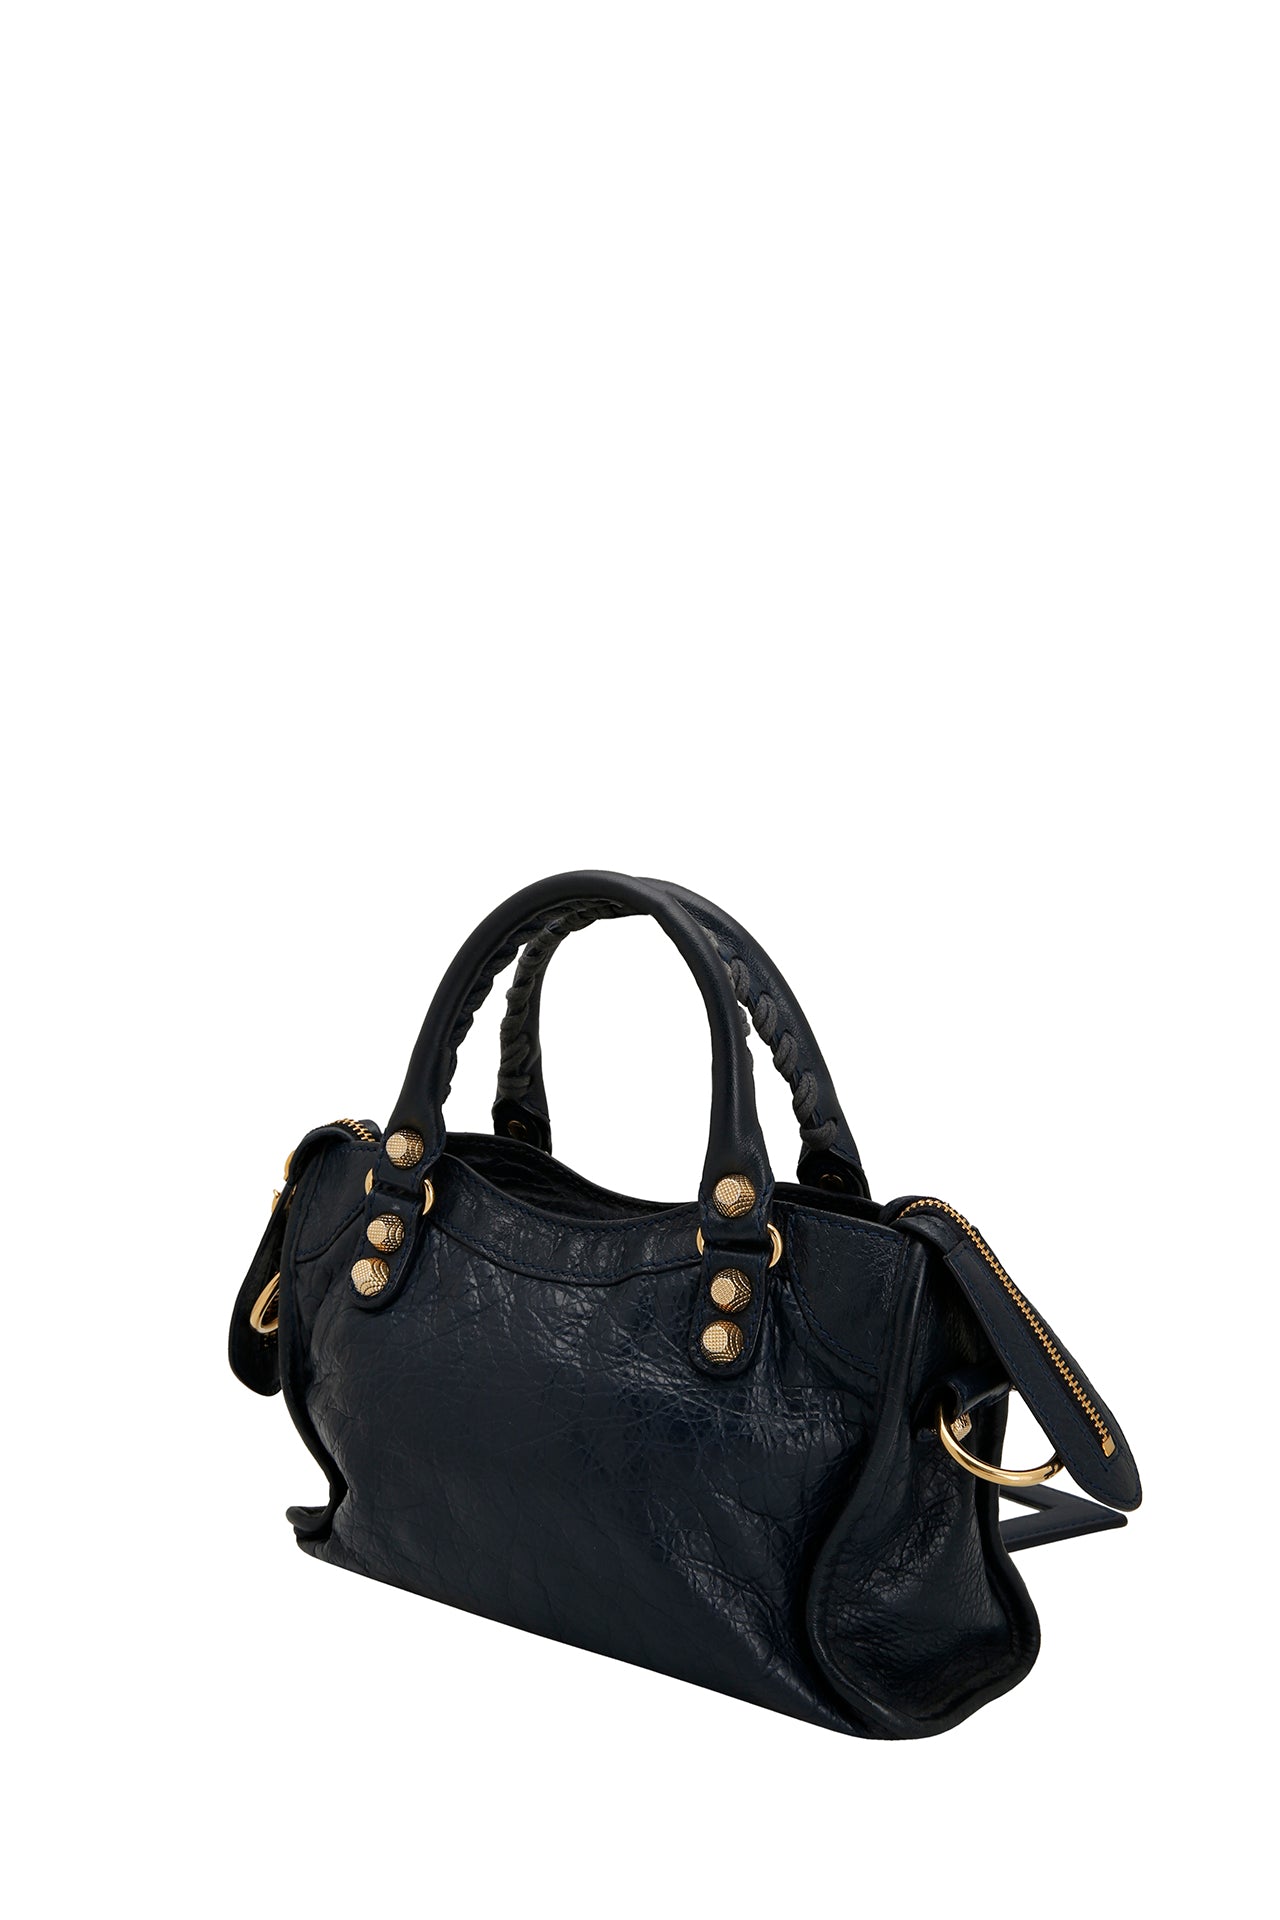 Balenciaga Navy Blue Lambskin Leather Mini Classic City Bag